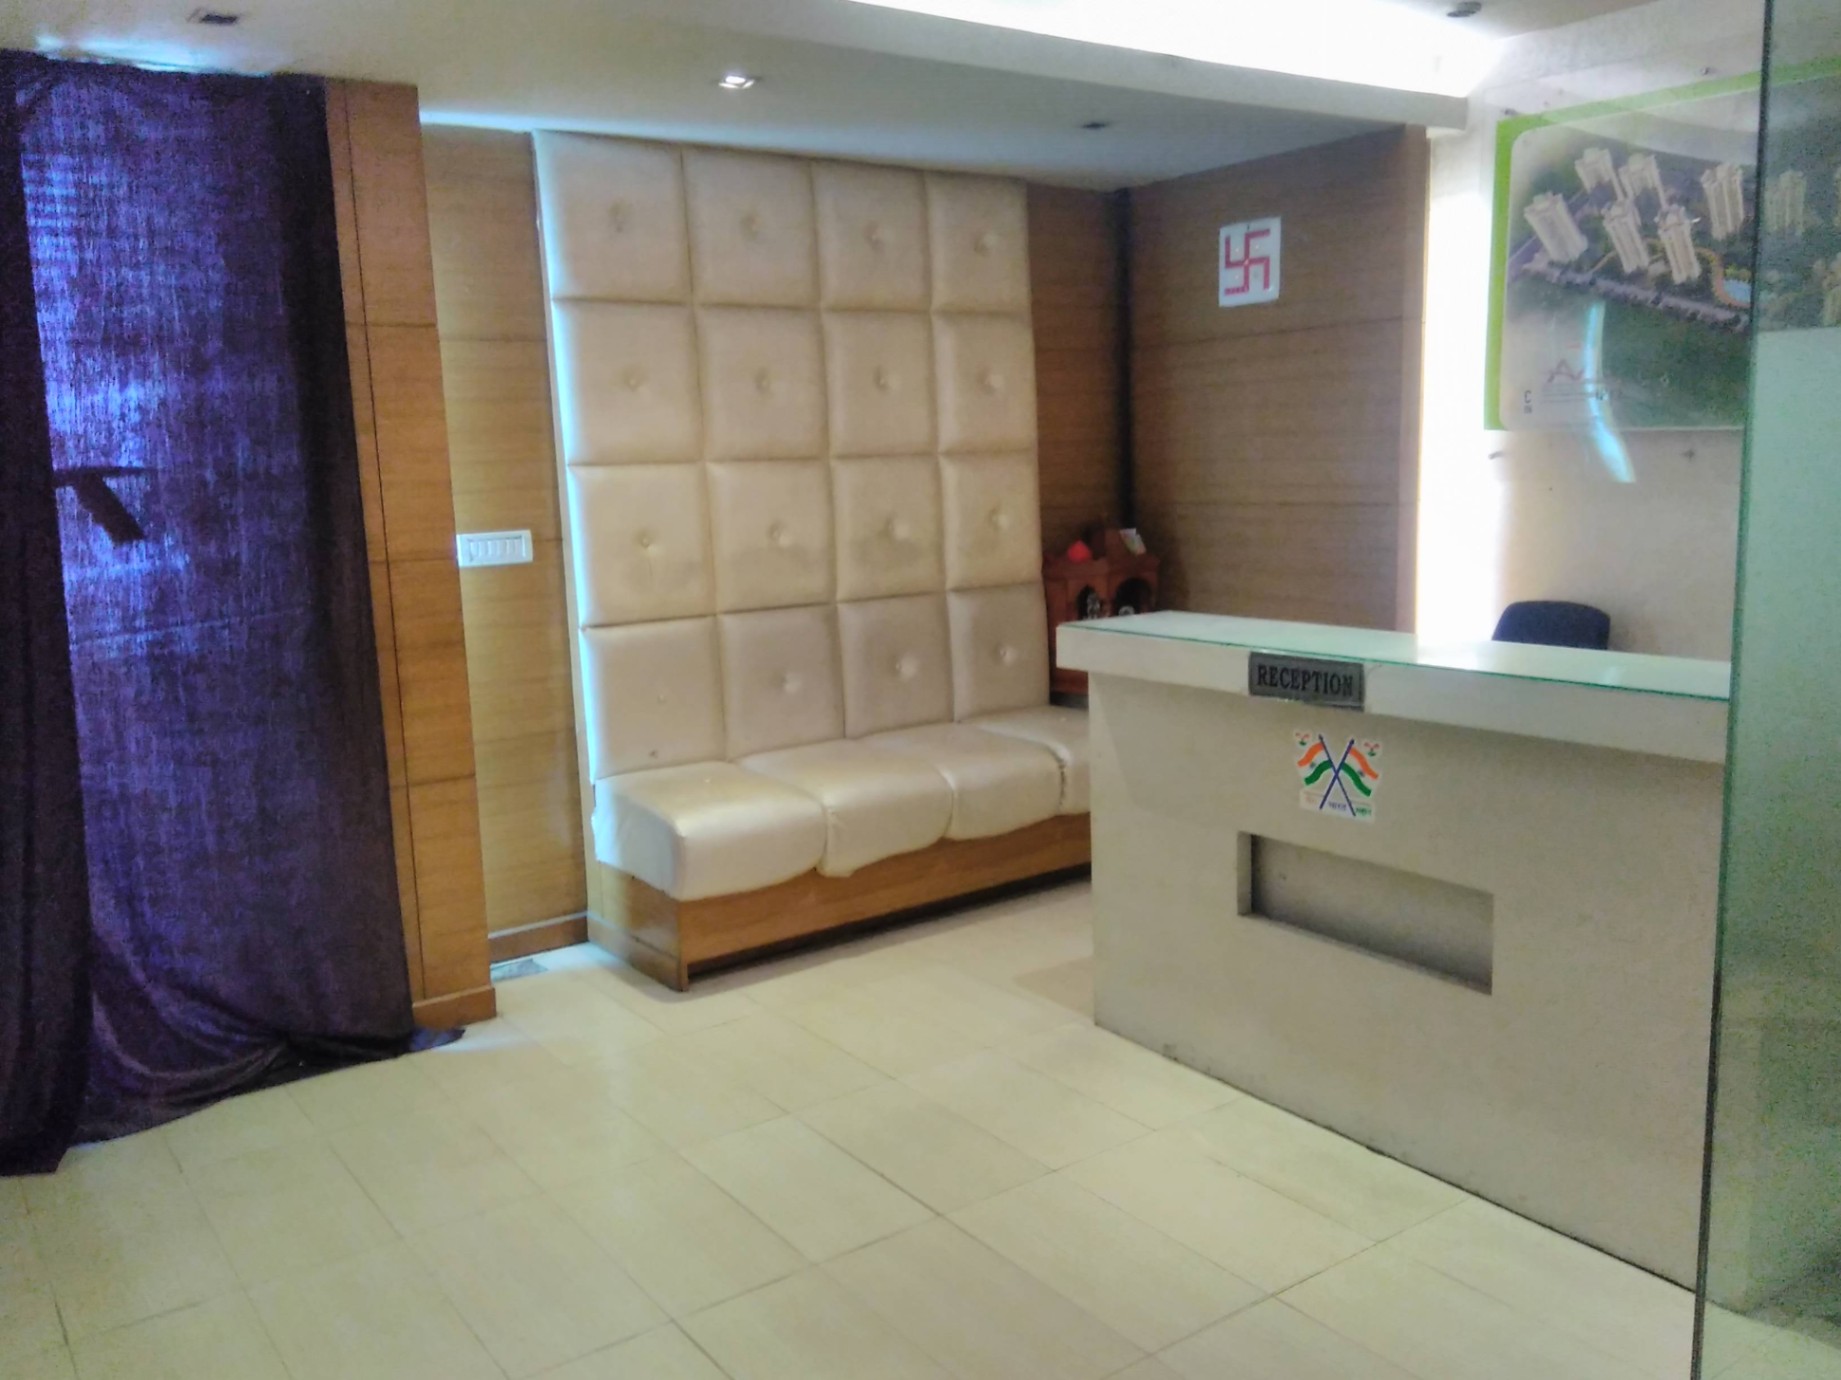 Rent Office/ Shop, 2950 sq ft carpet area, Furnished for rent @Sector 3 Noida